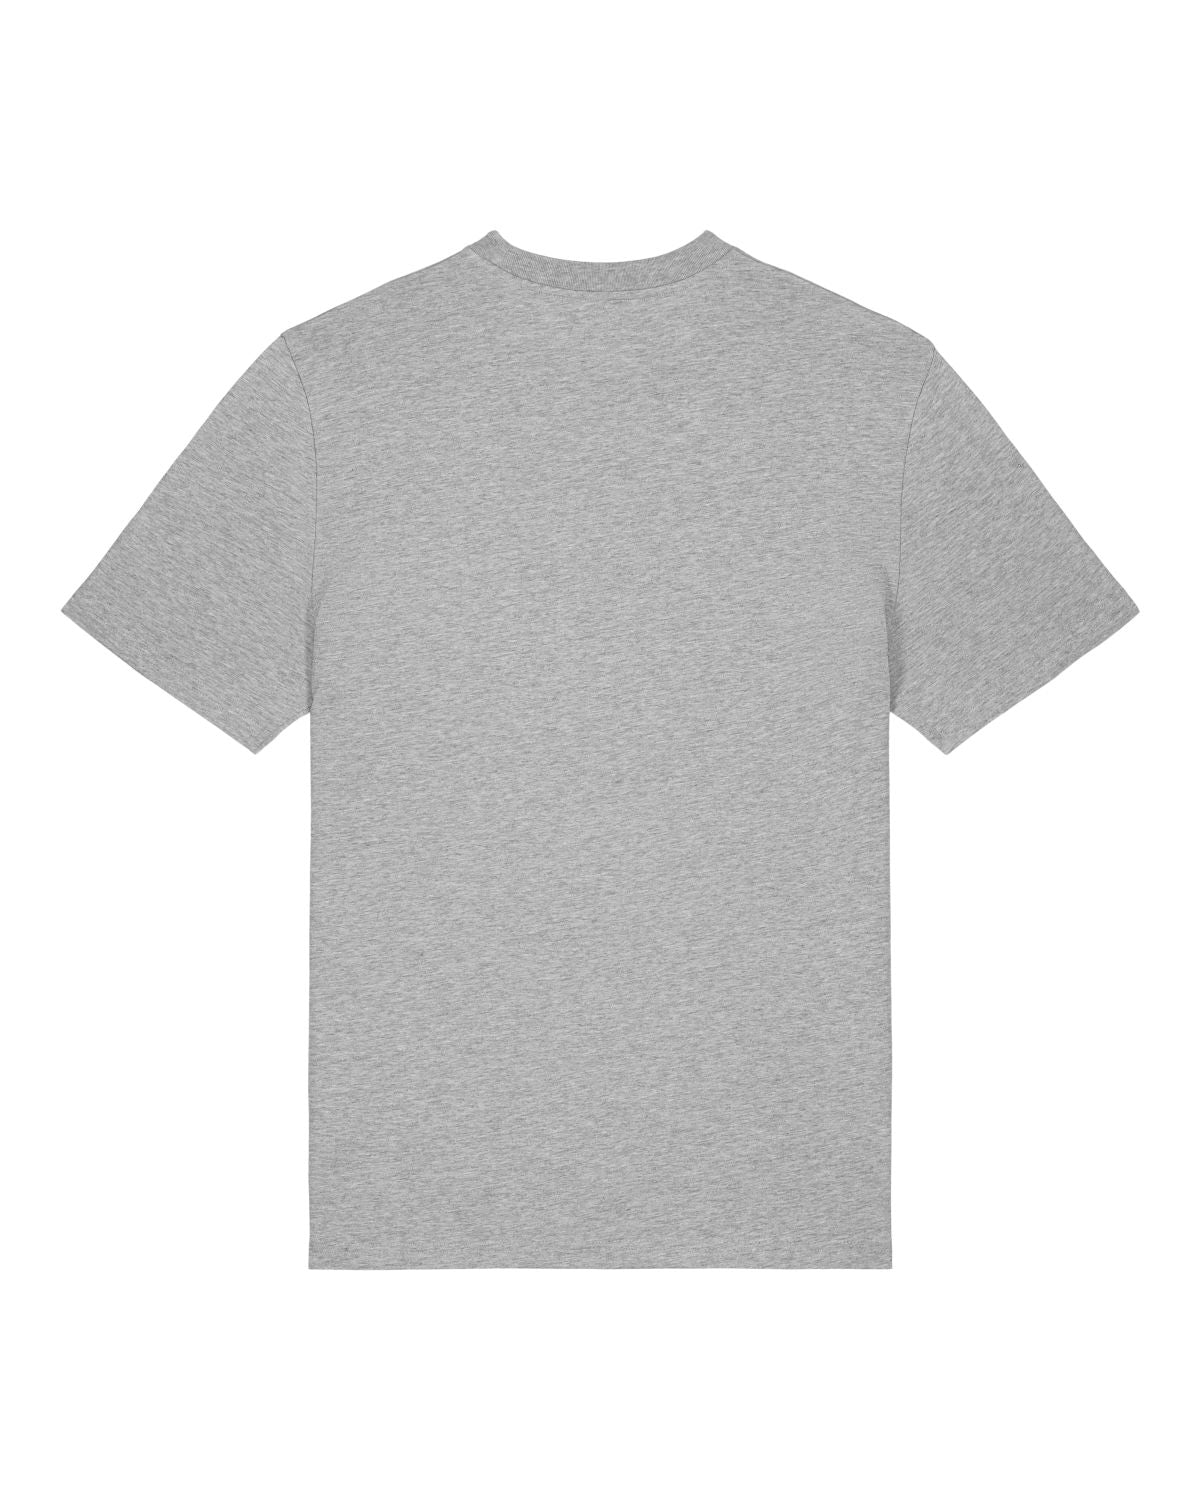 UU Unisex T-shirt - gray